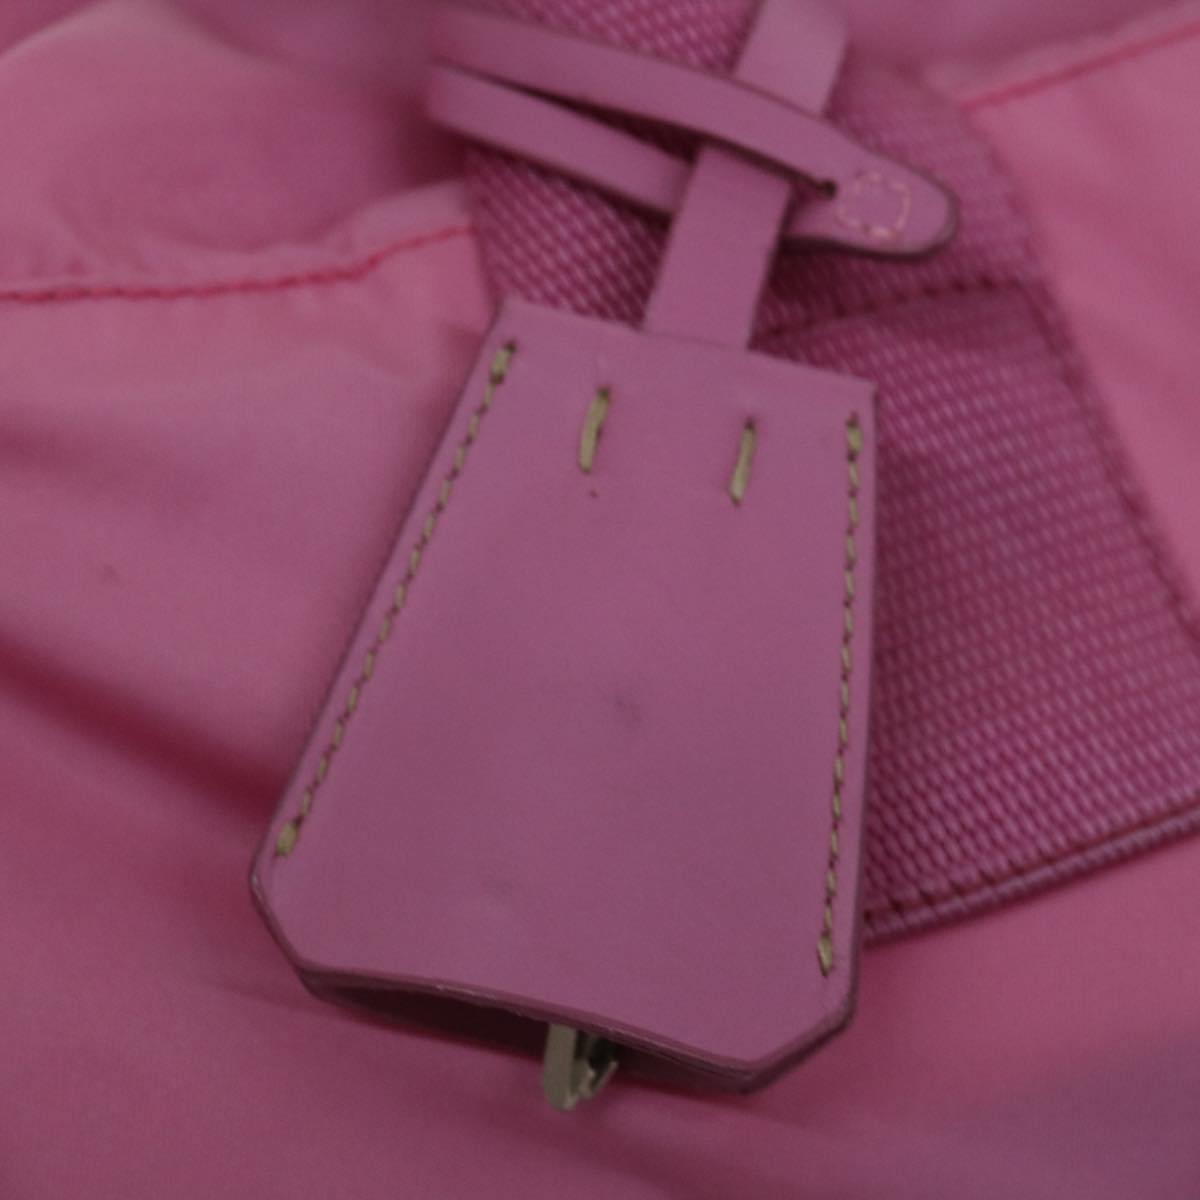 PRADA Boston Bag Nylon Pink Auth ac2870